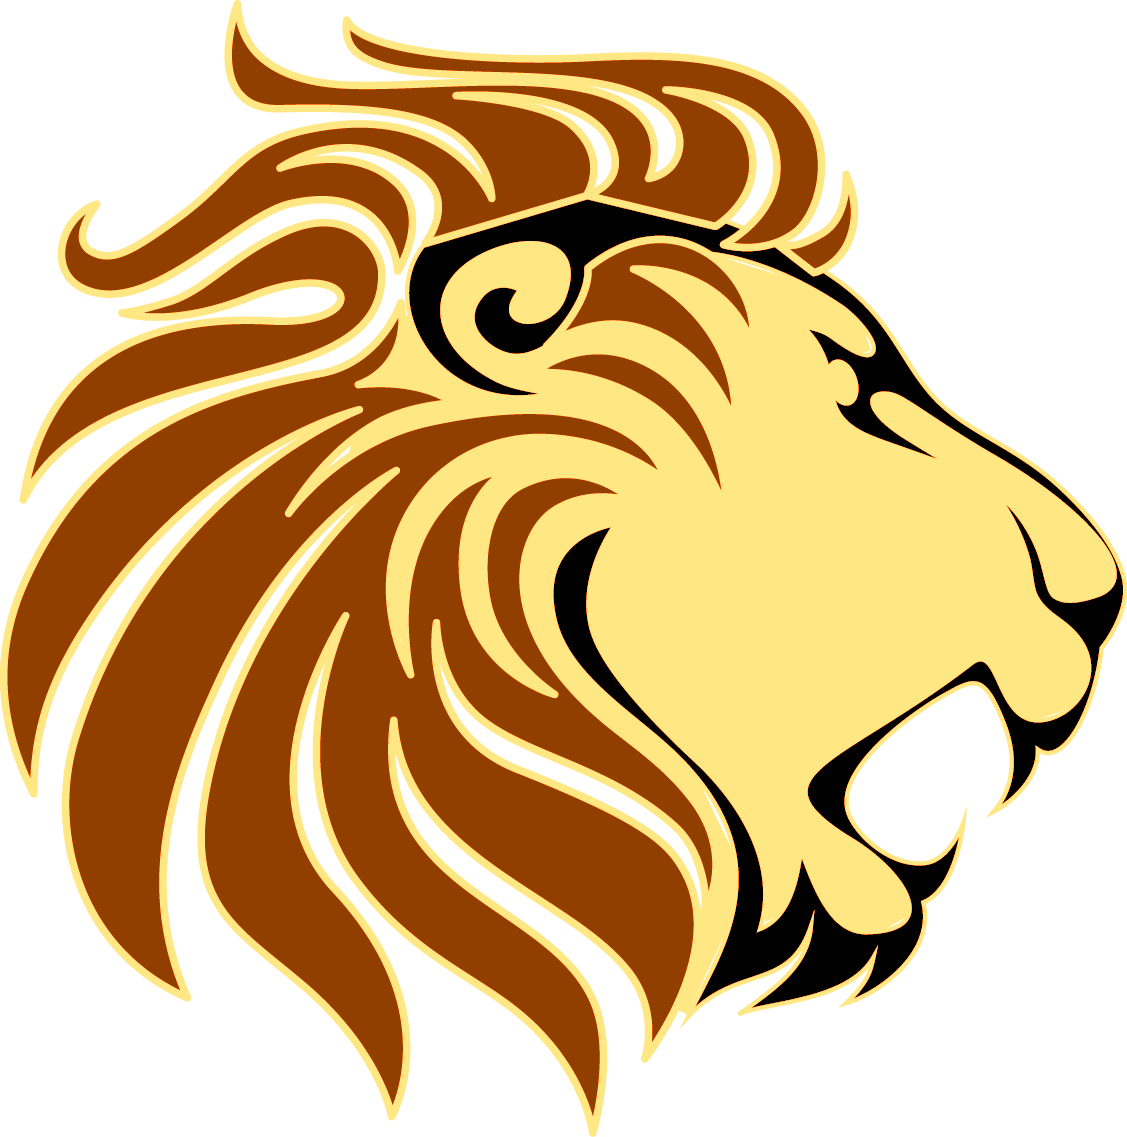 Lion Silhouette Vector - Symbols That Represent Pride (1127x1137)